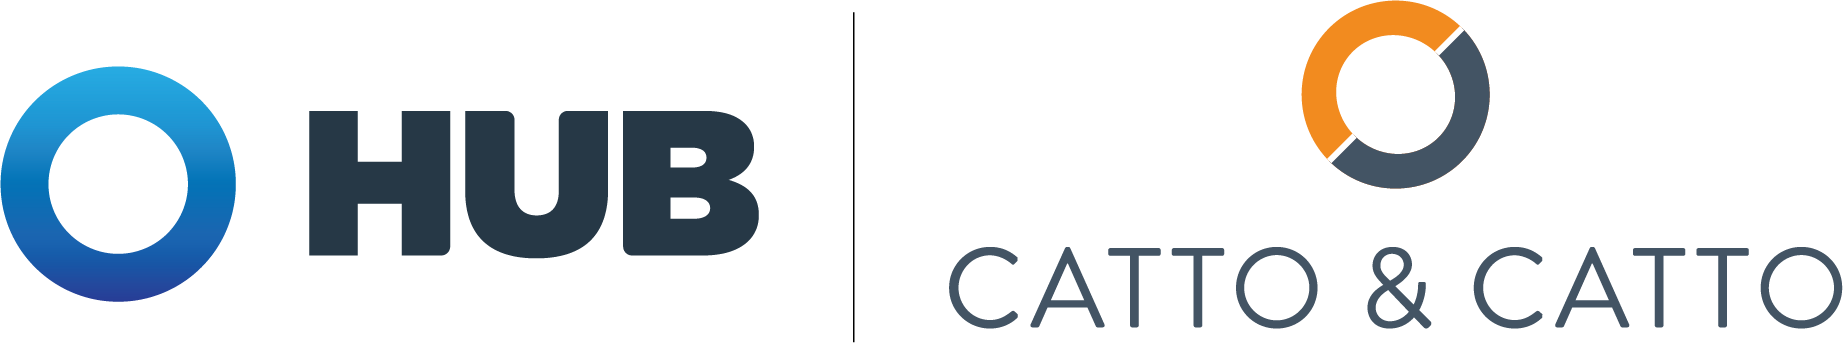 HUB-Catto Logo no tagline.png